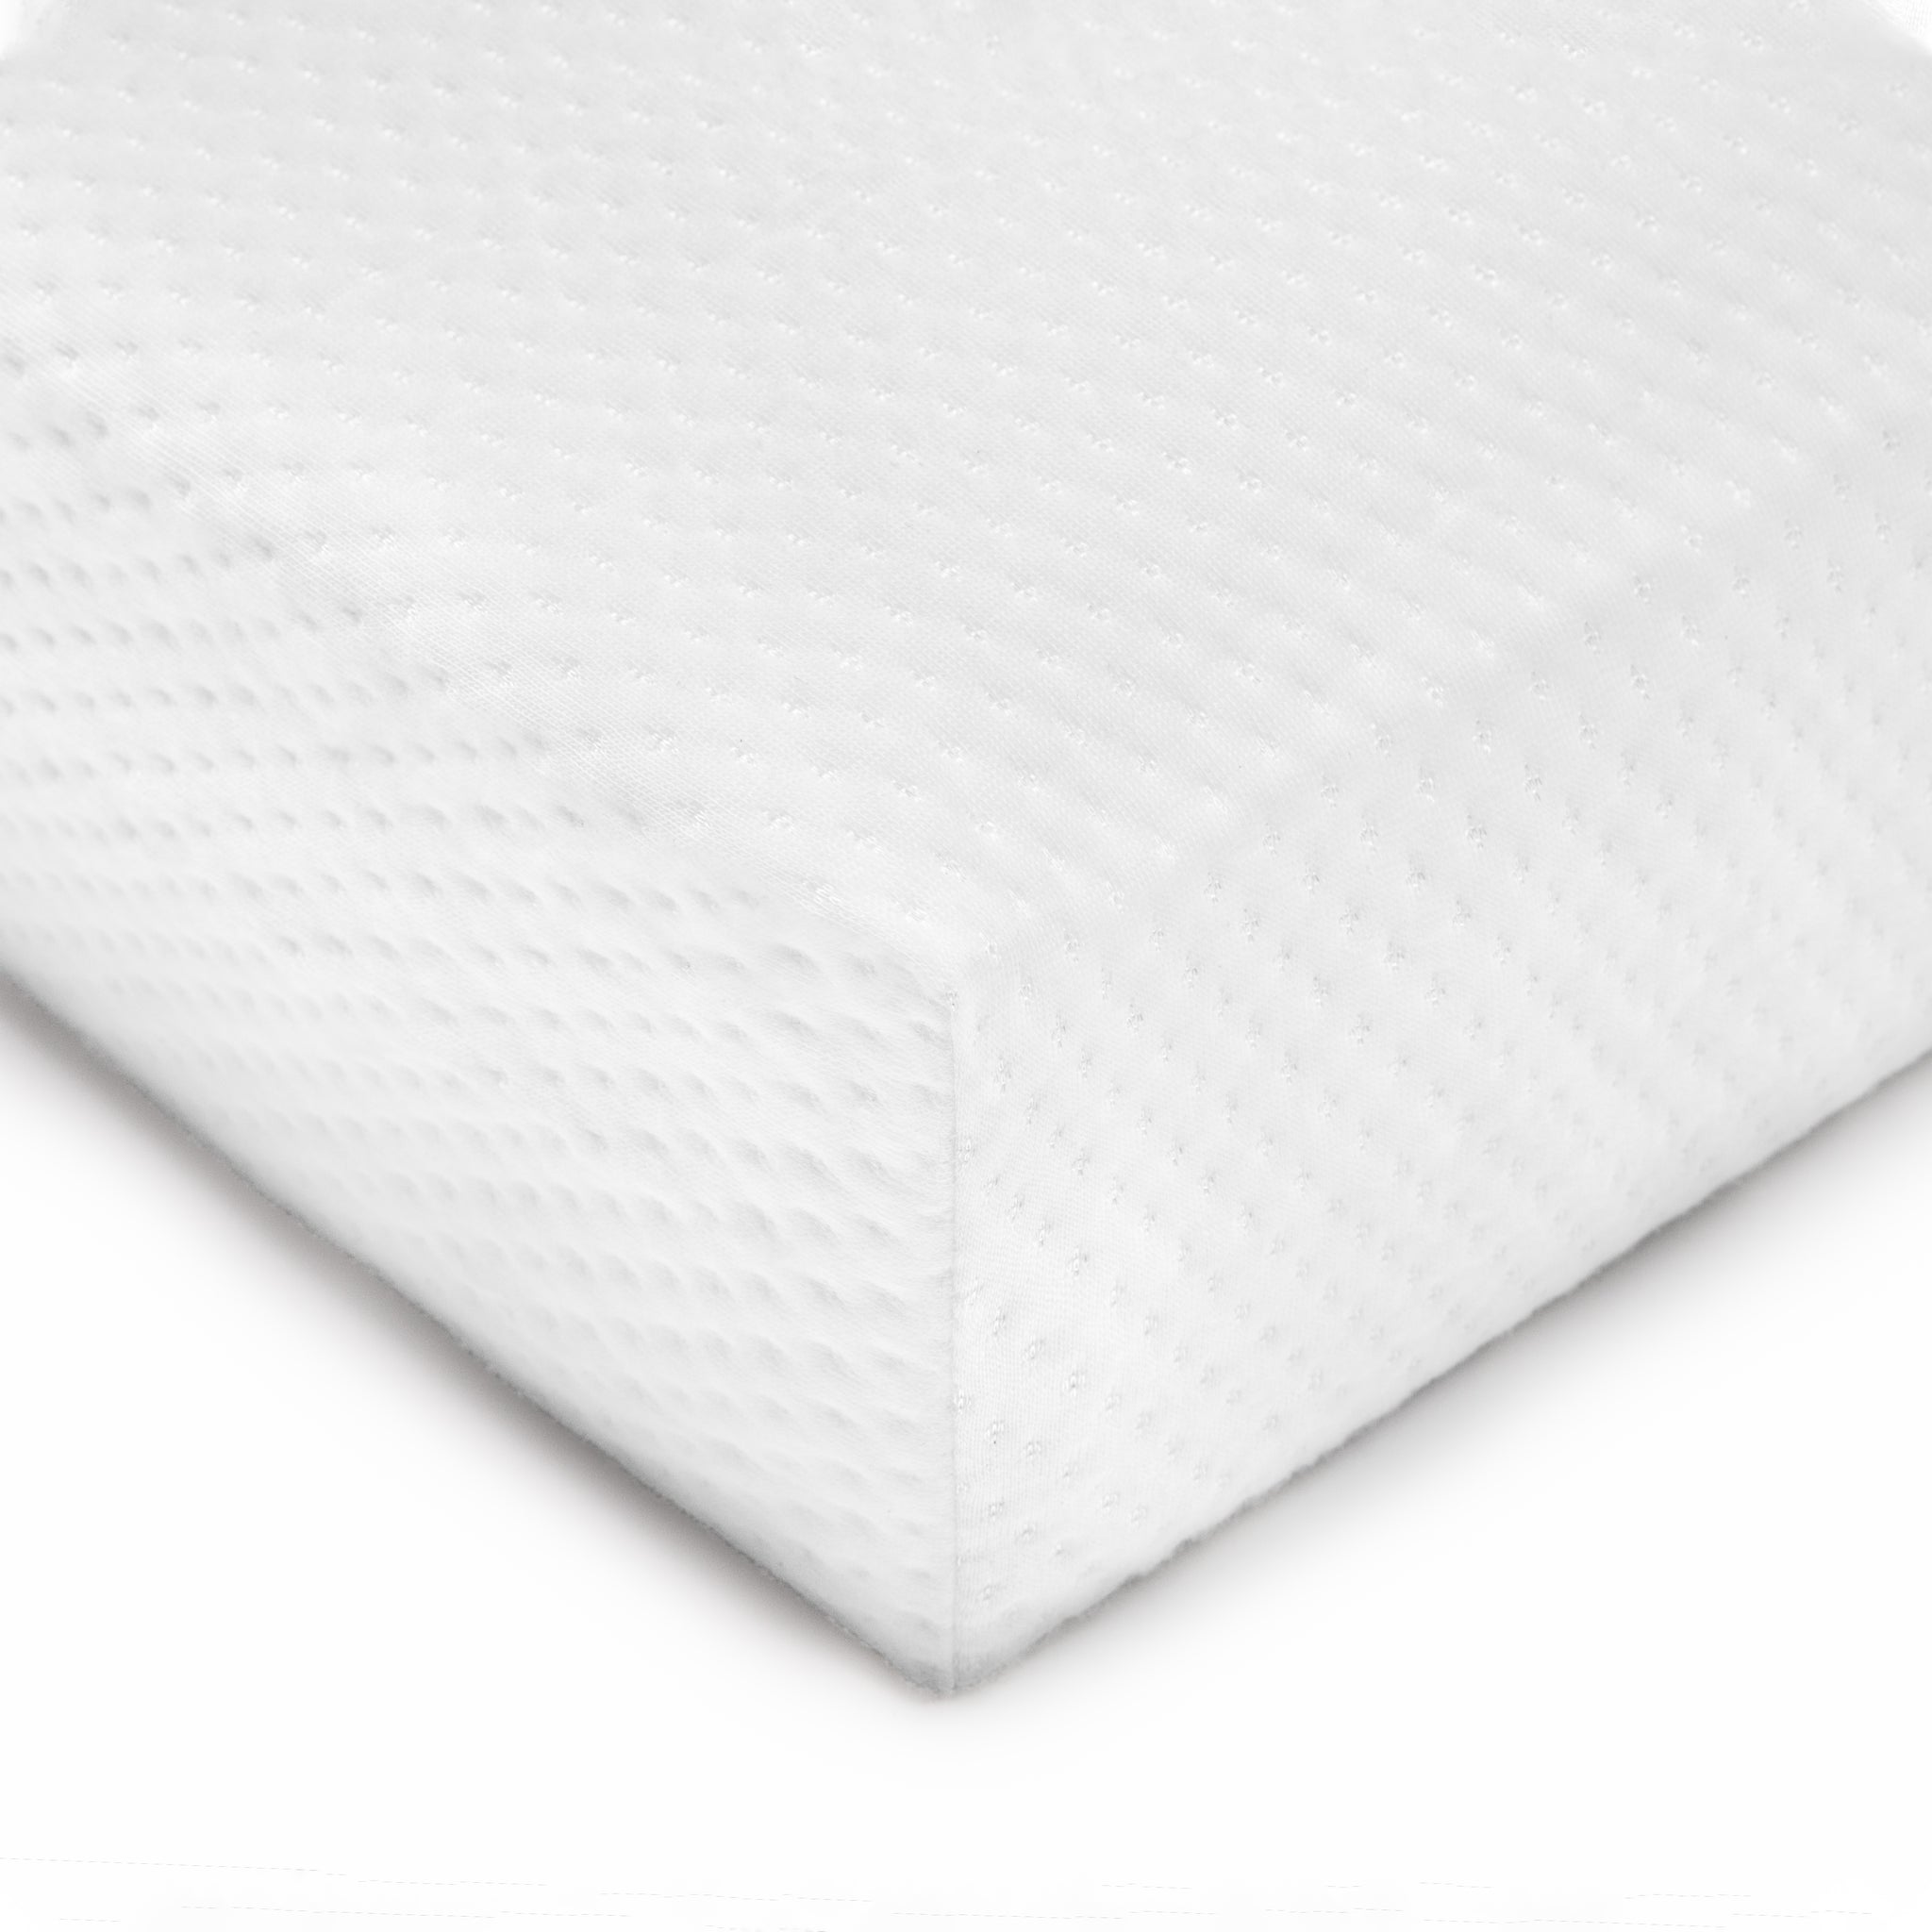 Graco Premium Foam Crib and Toddler Bed Mattress, White